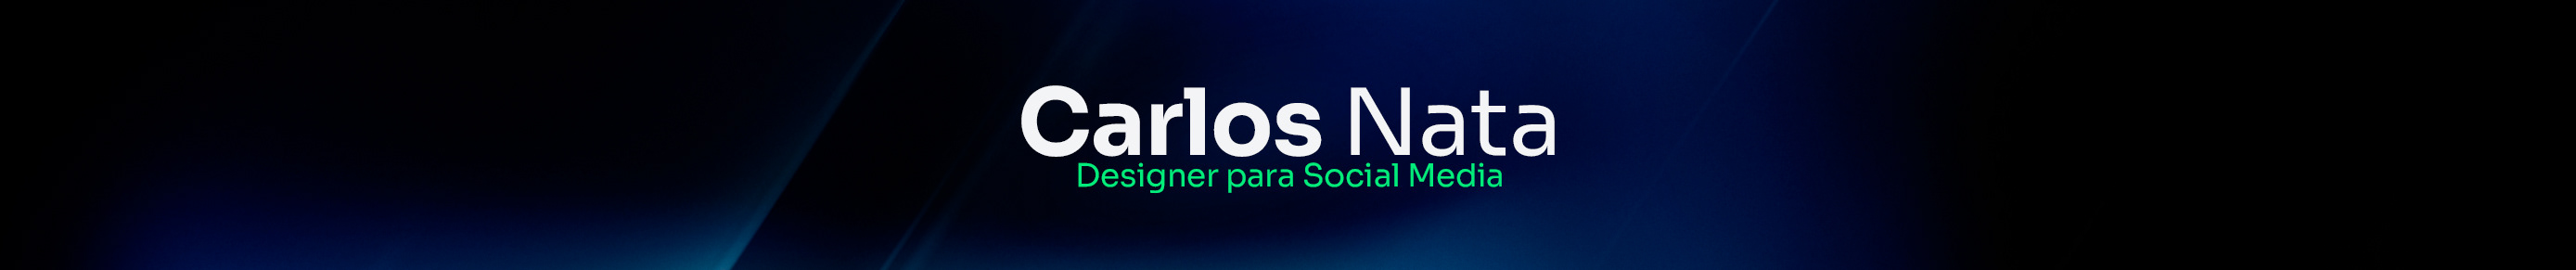 Carlos Nata profil başlığı